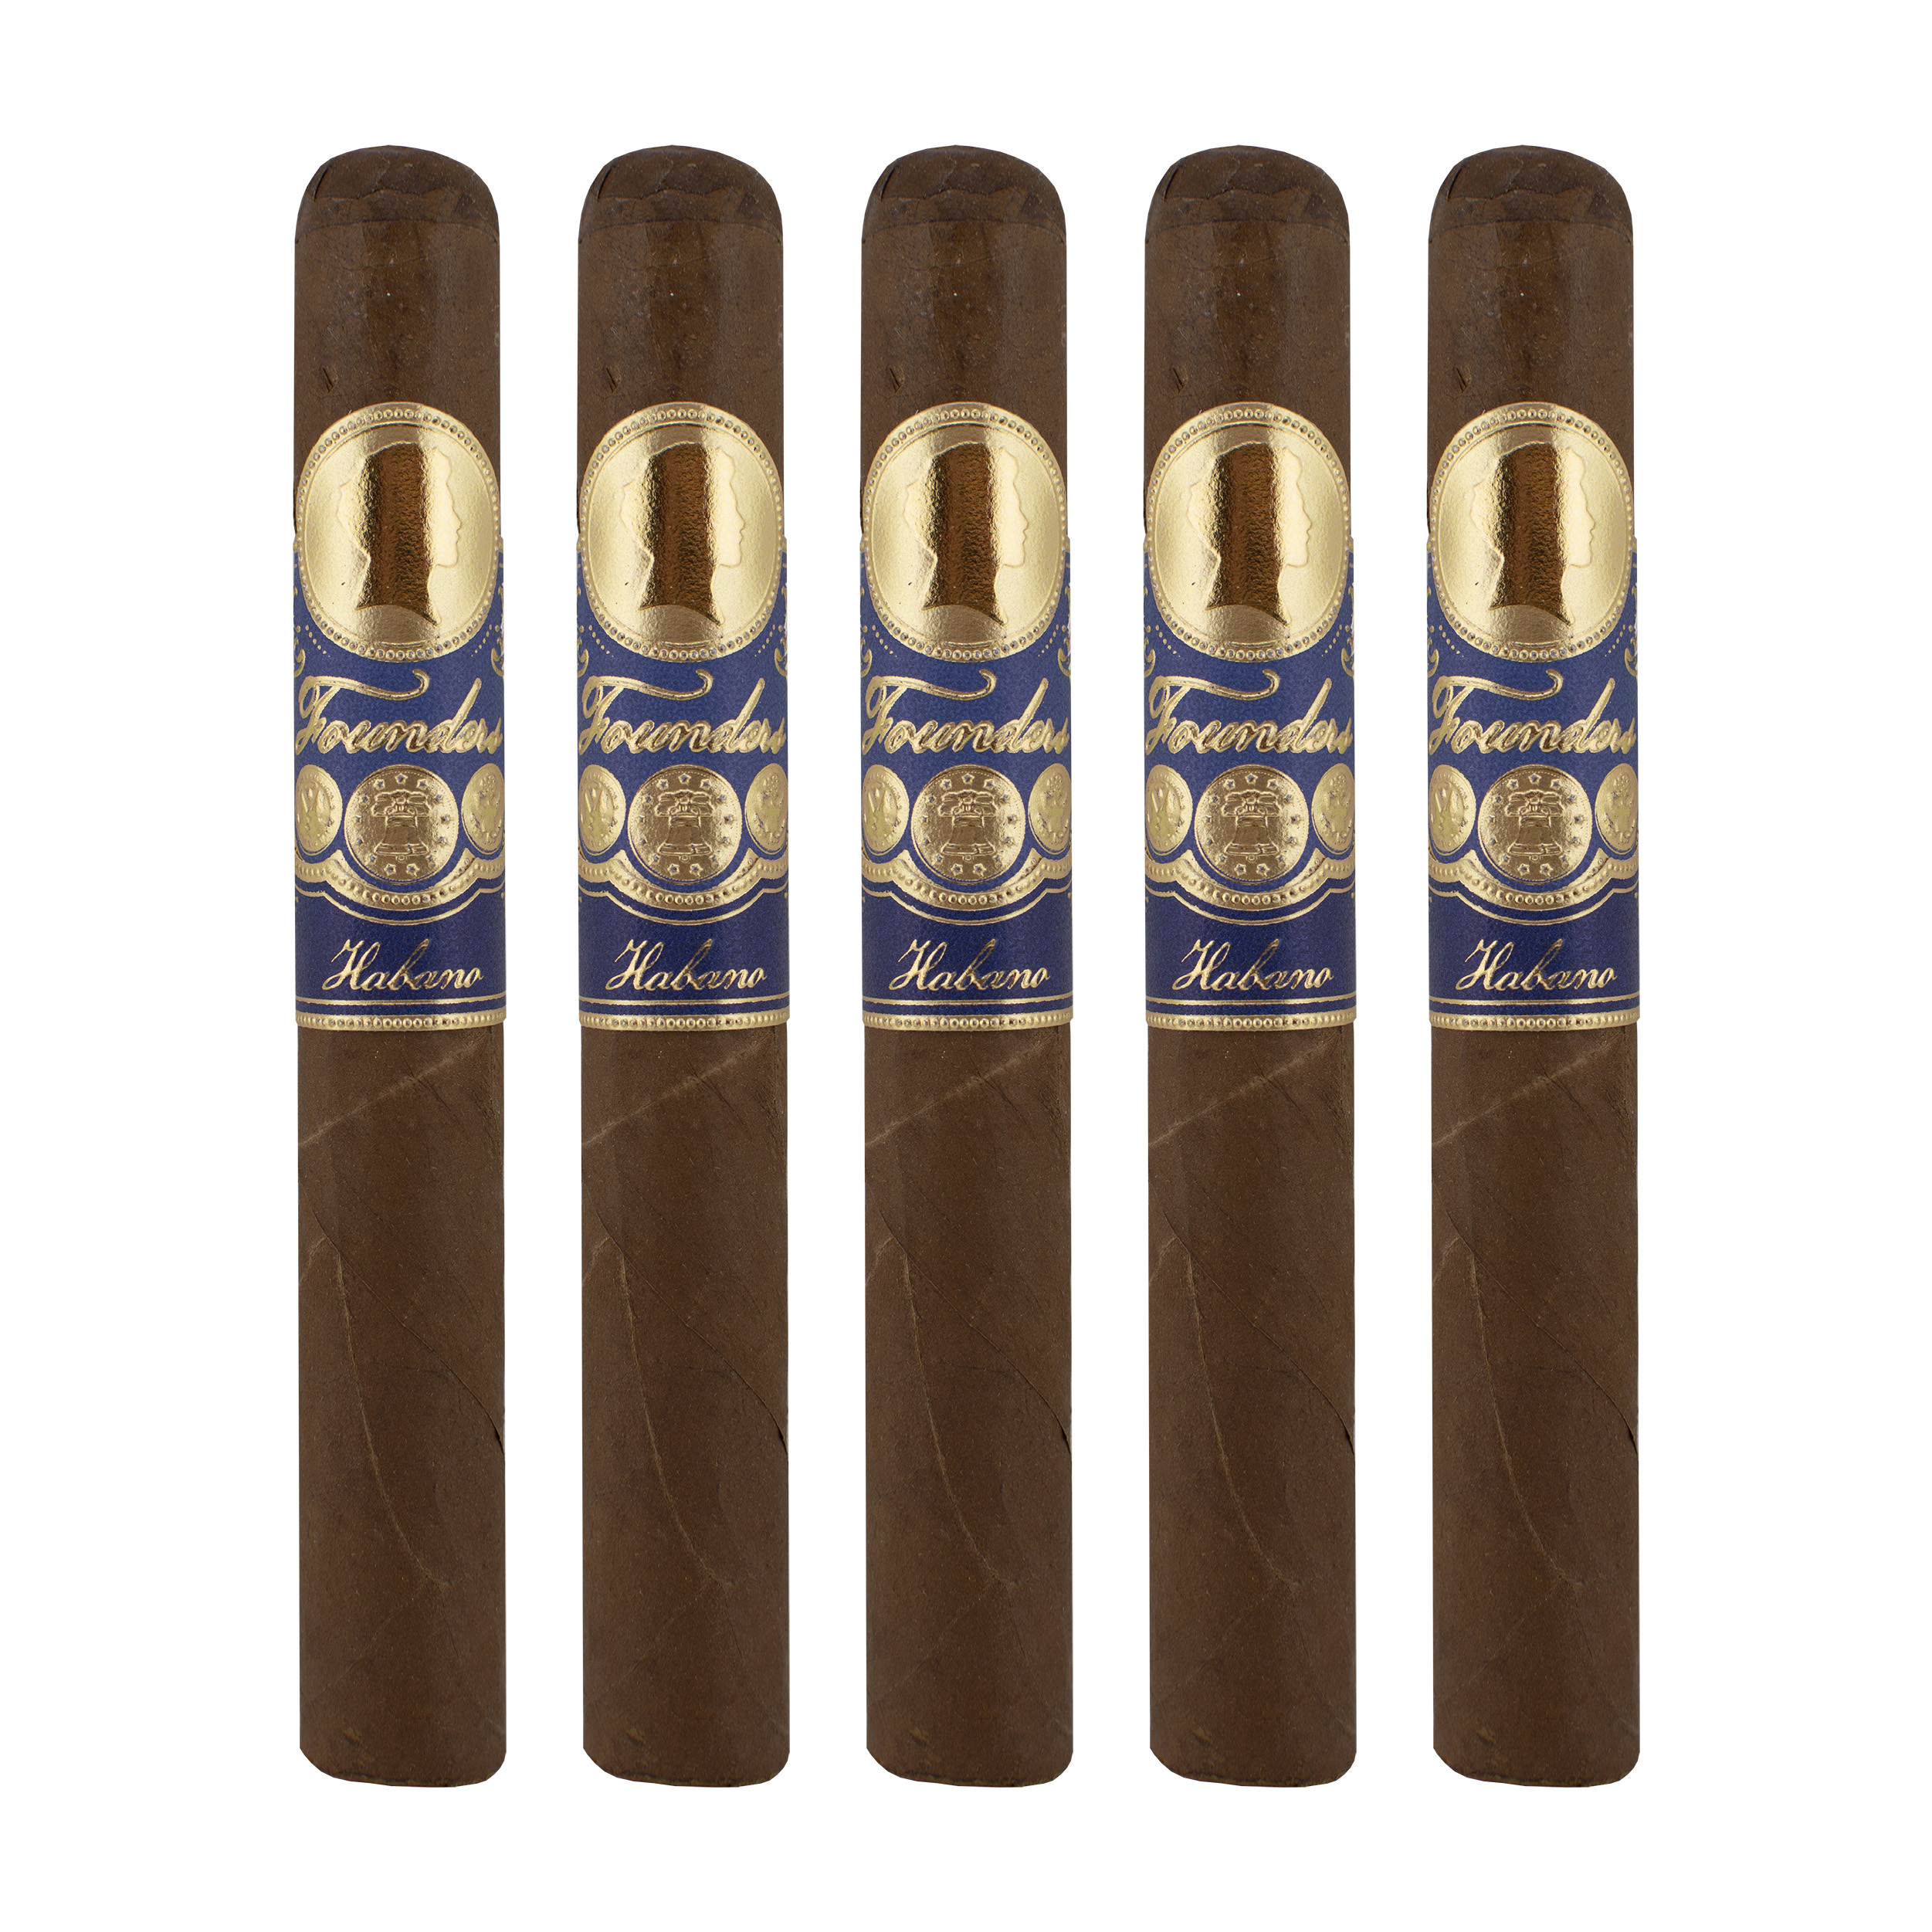 Founders Douglas Habano Toro Cigar - 5 Pack